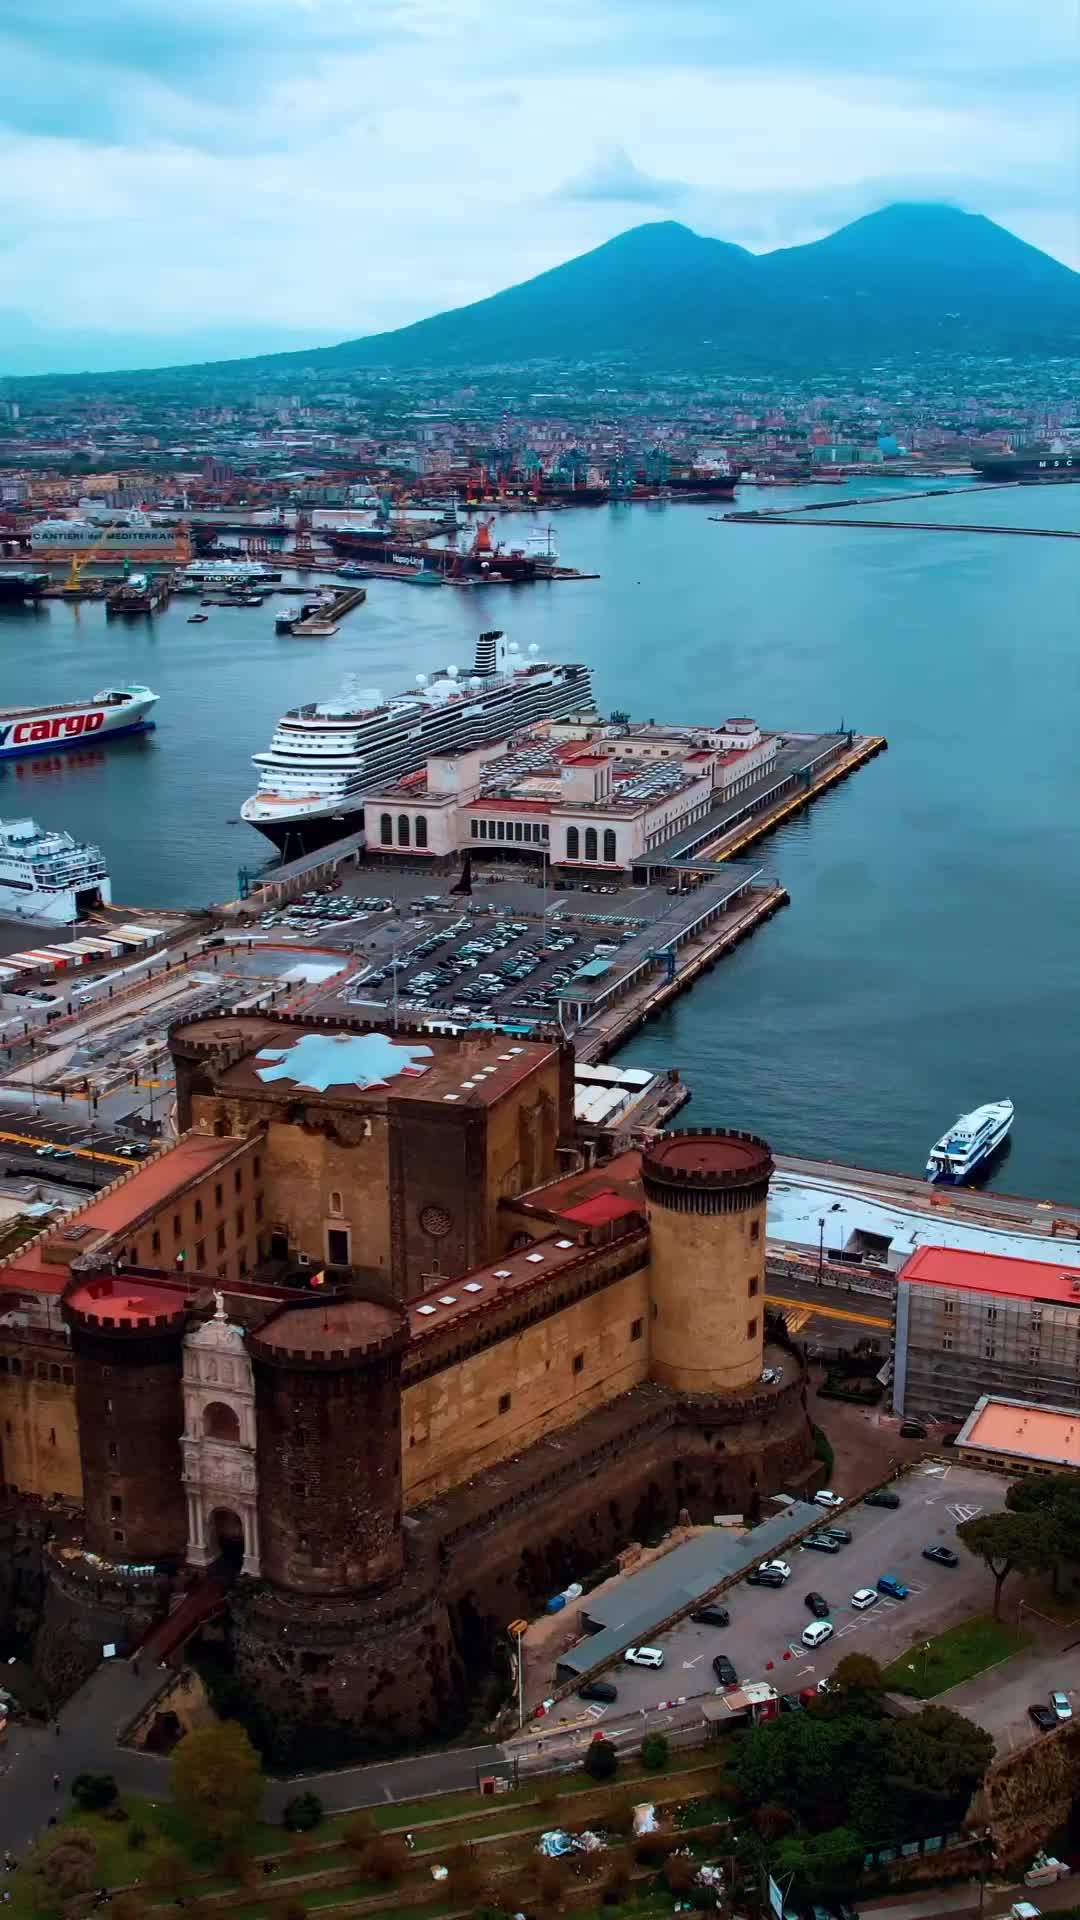 Maschio Angioino: Explore Naples' Historic Fortress